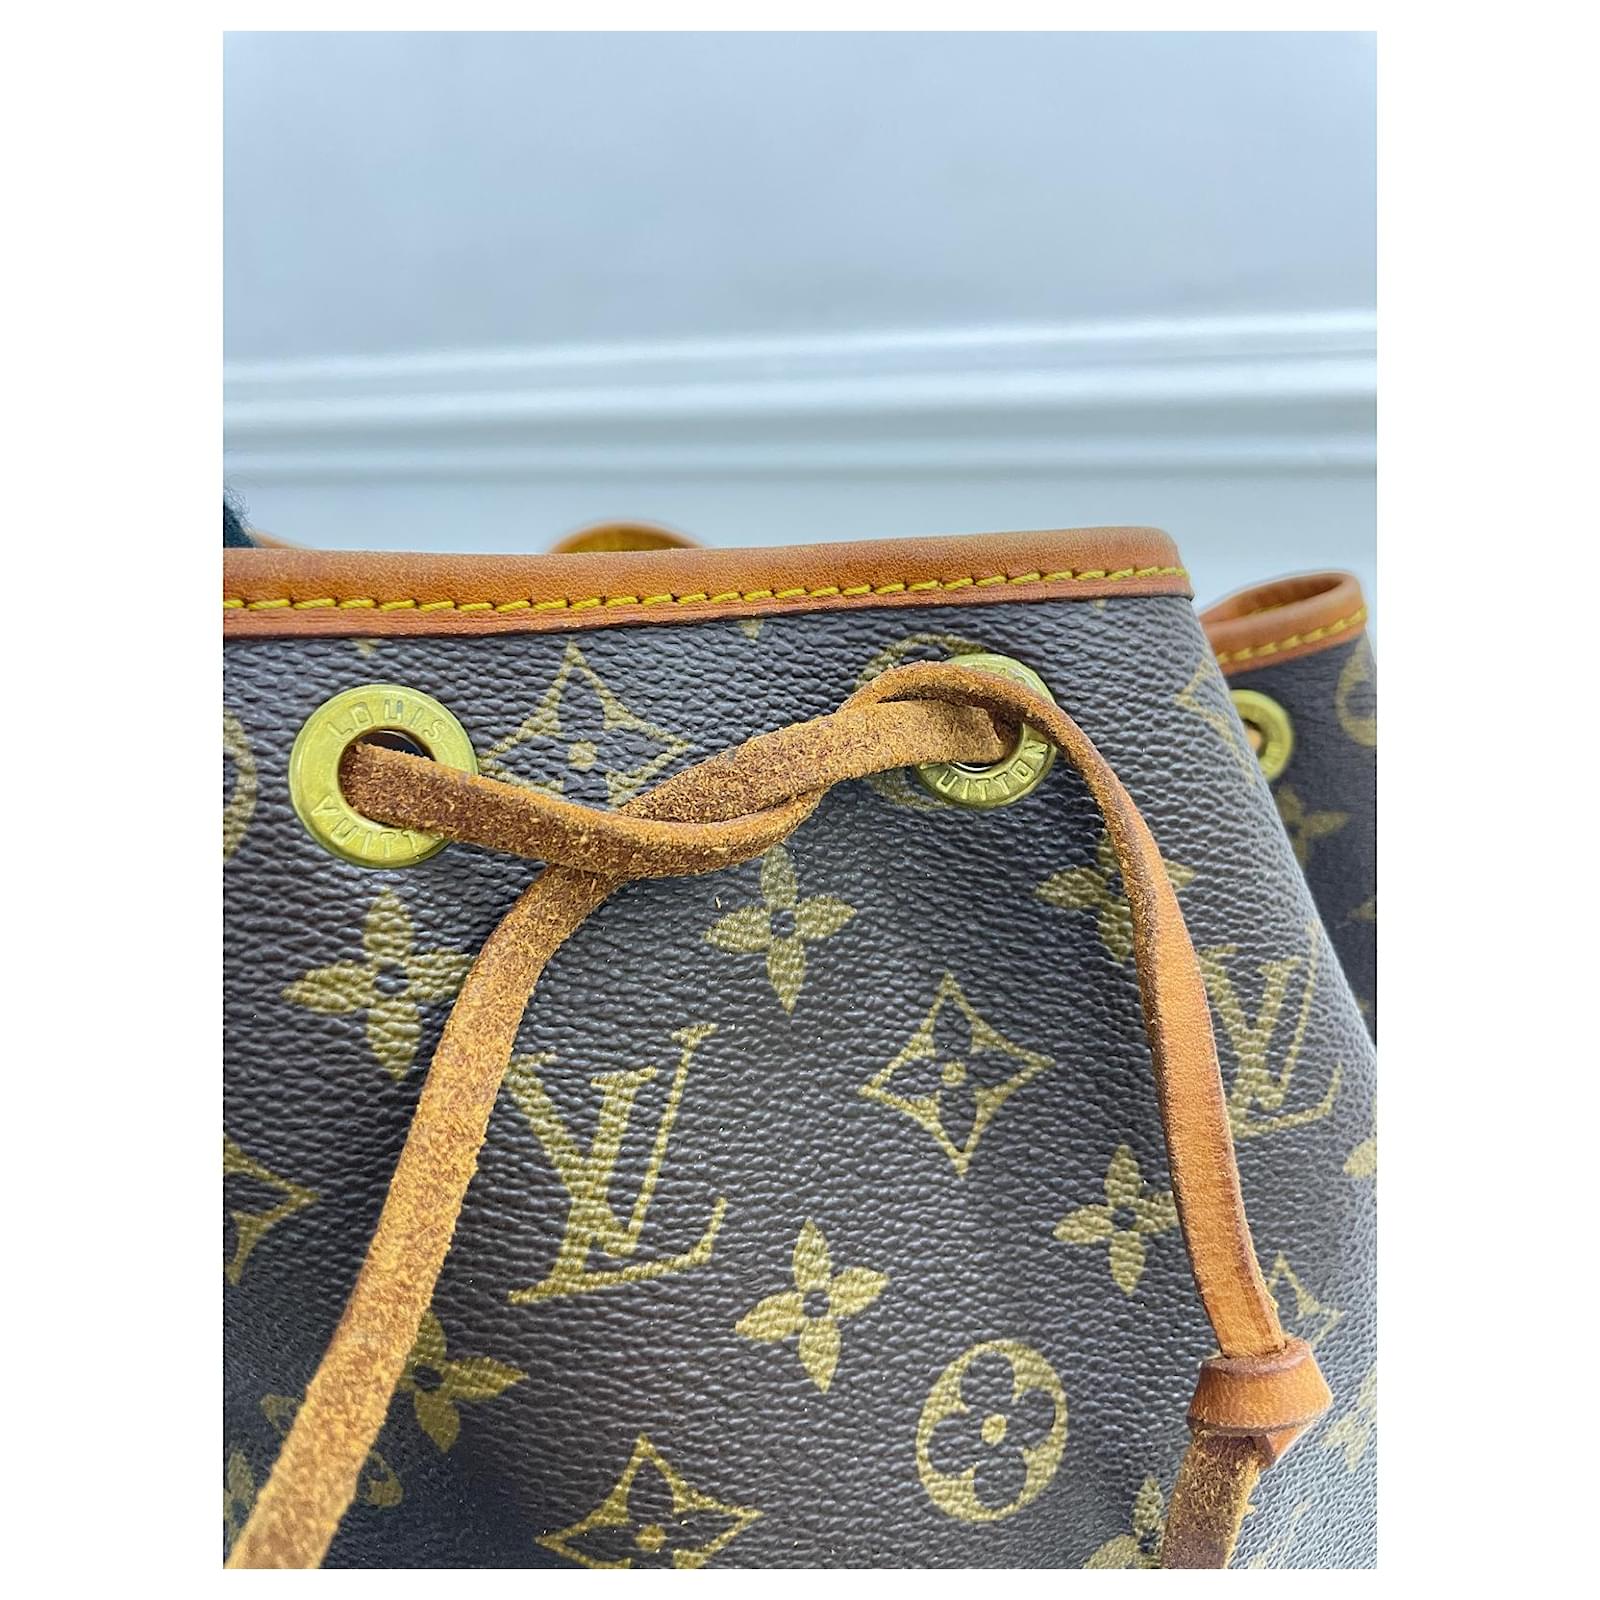 Louis Vuitton Monogram Vintage Bucket Bag with Drawstrings